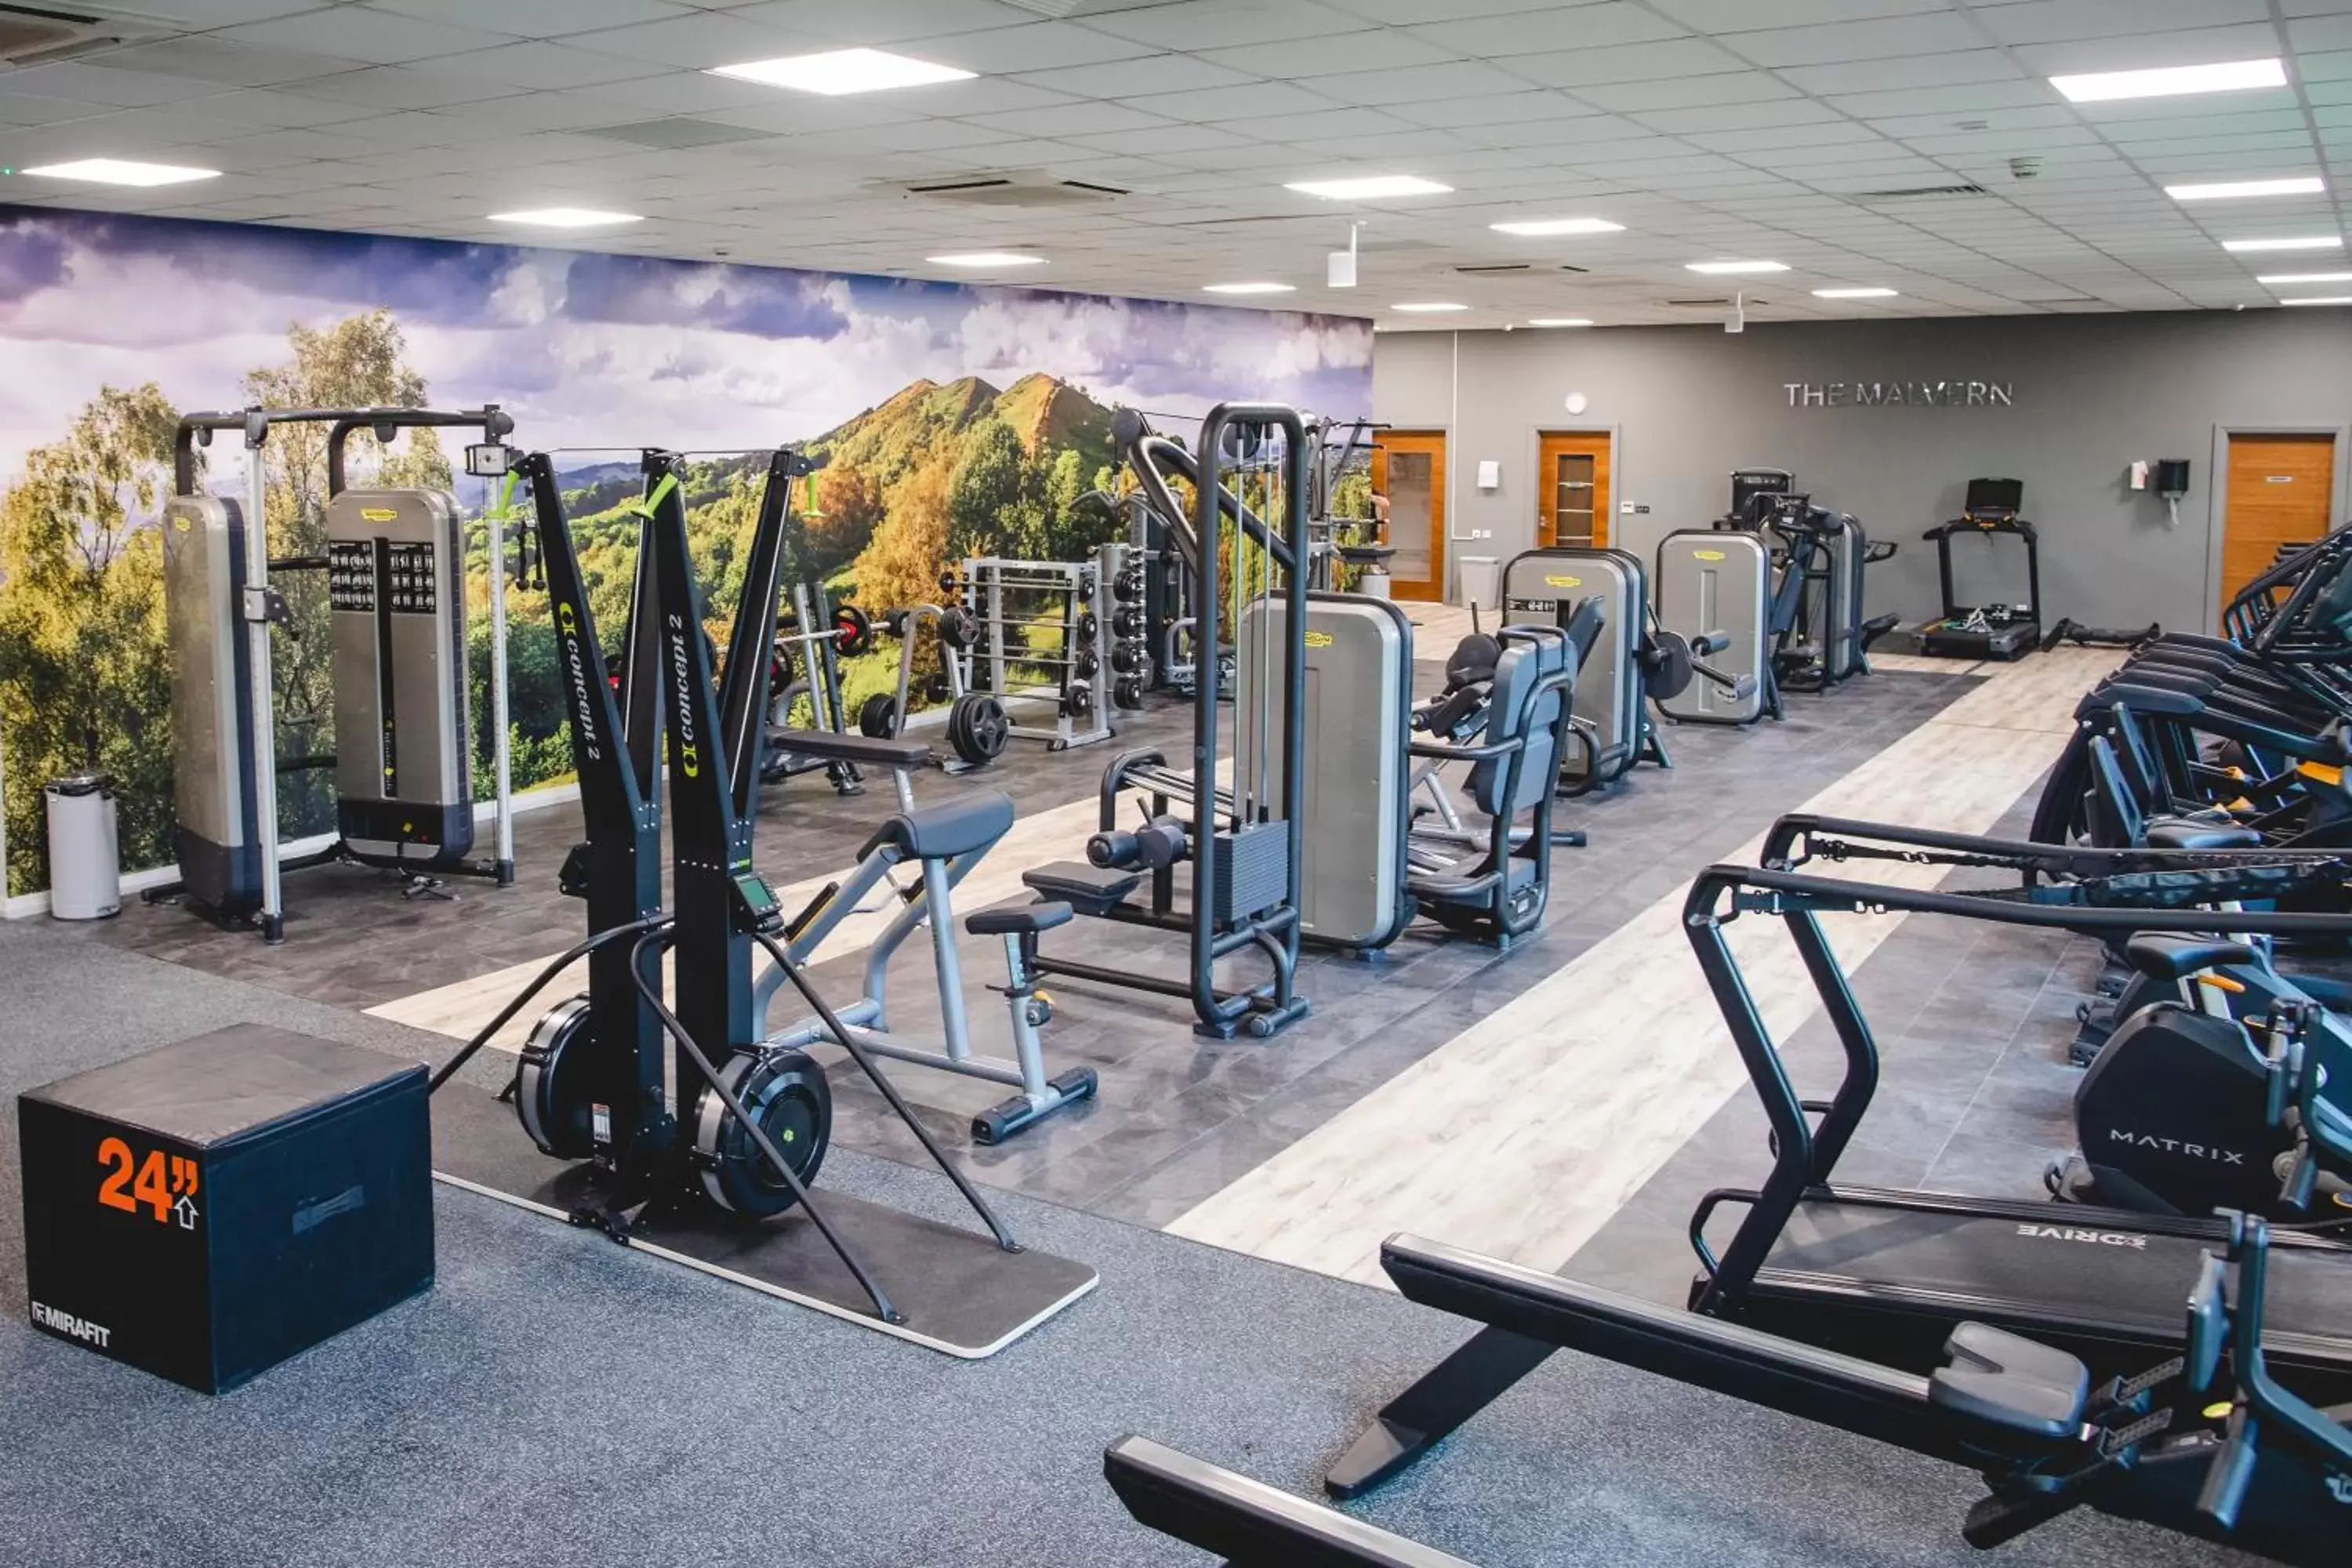 Fitness centre/facilities, Fitness Center/Facilities in The Malvern